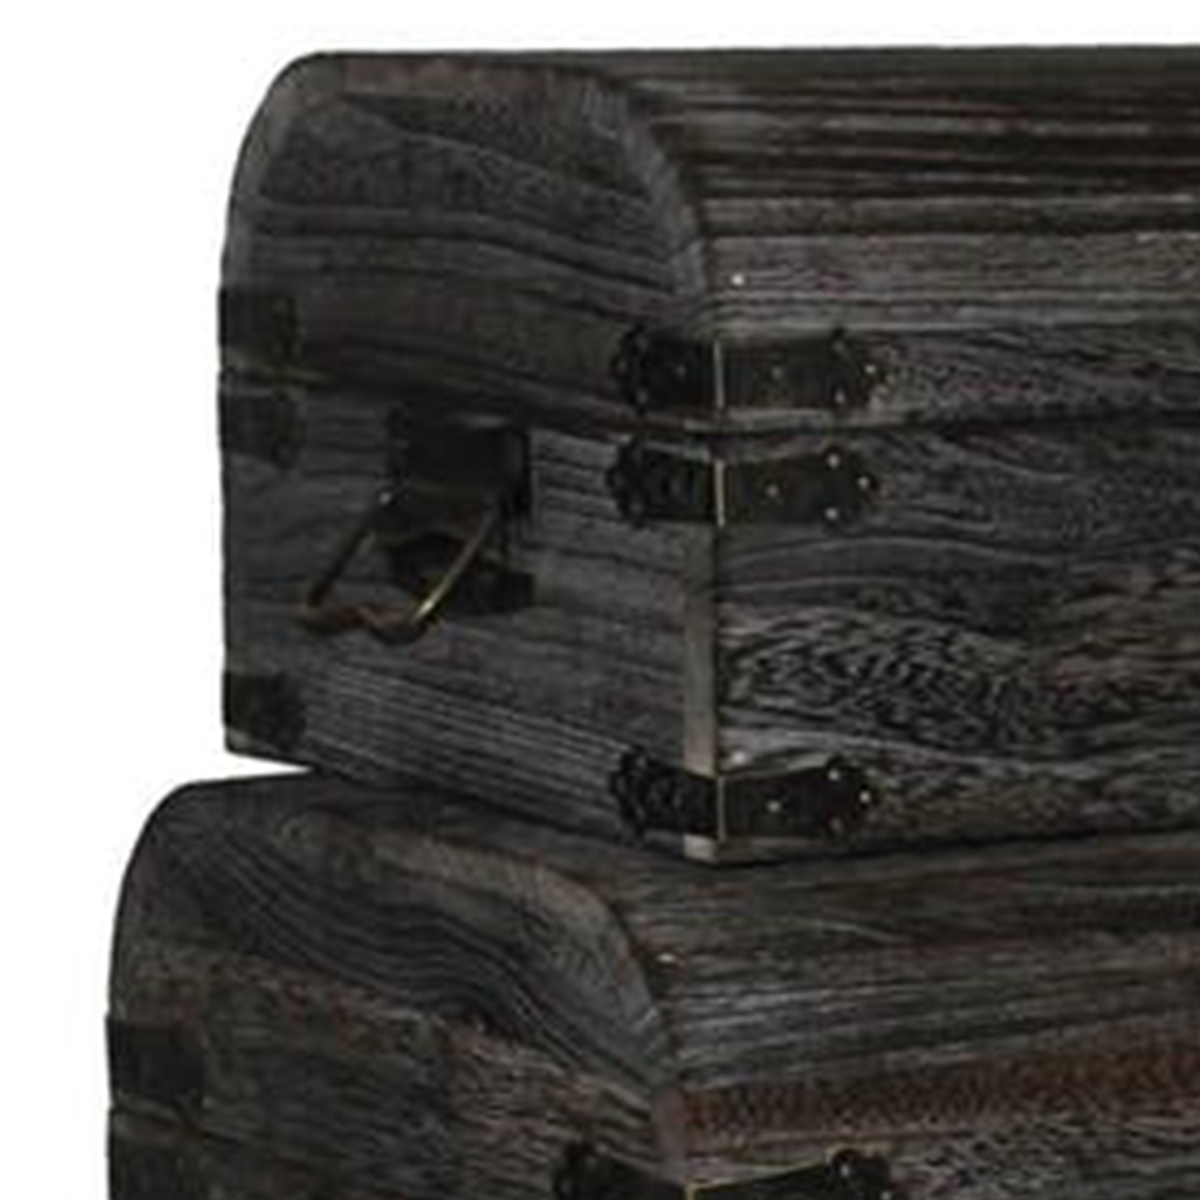 Wooden Lift Top Storage Box With Grain Details, Set Of 3, Gray- Saltoro Sherpi